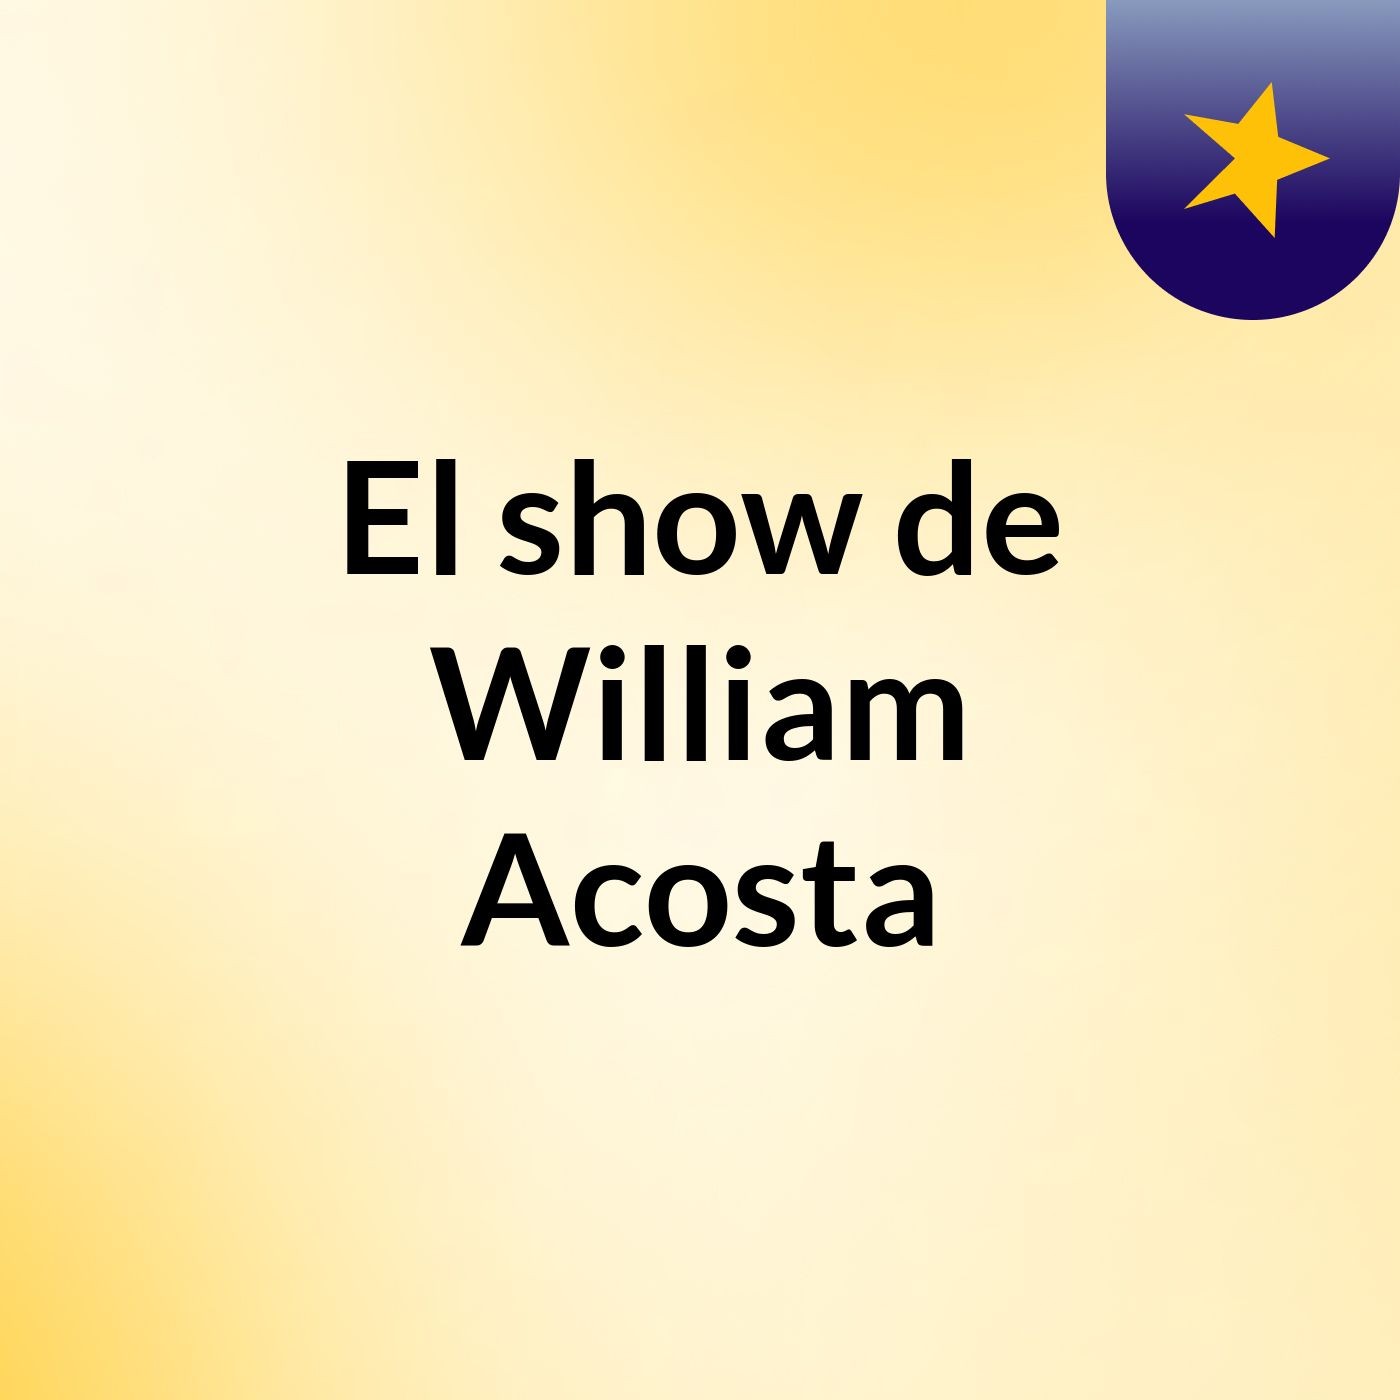 El show de William Acosta